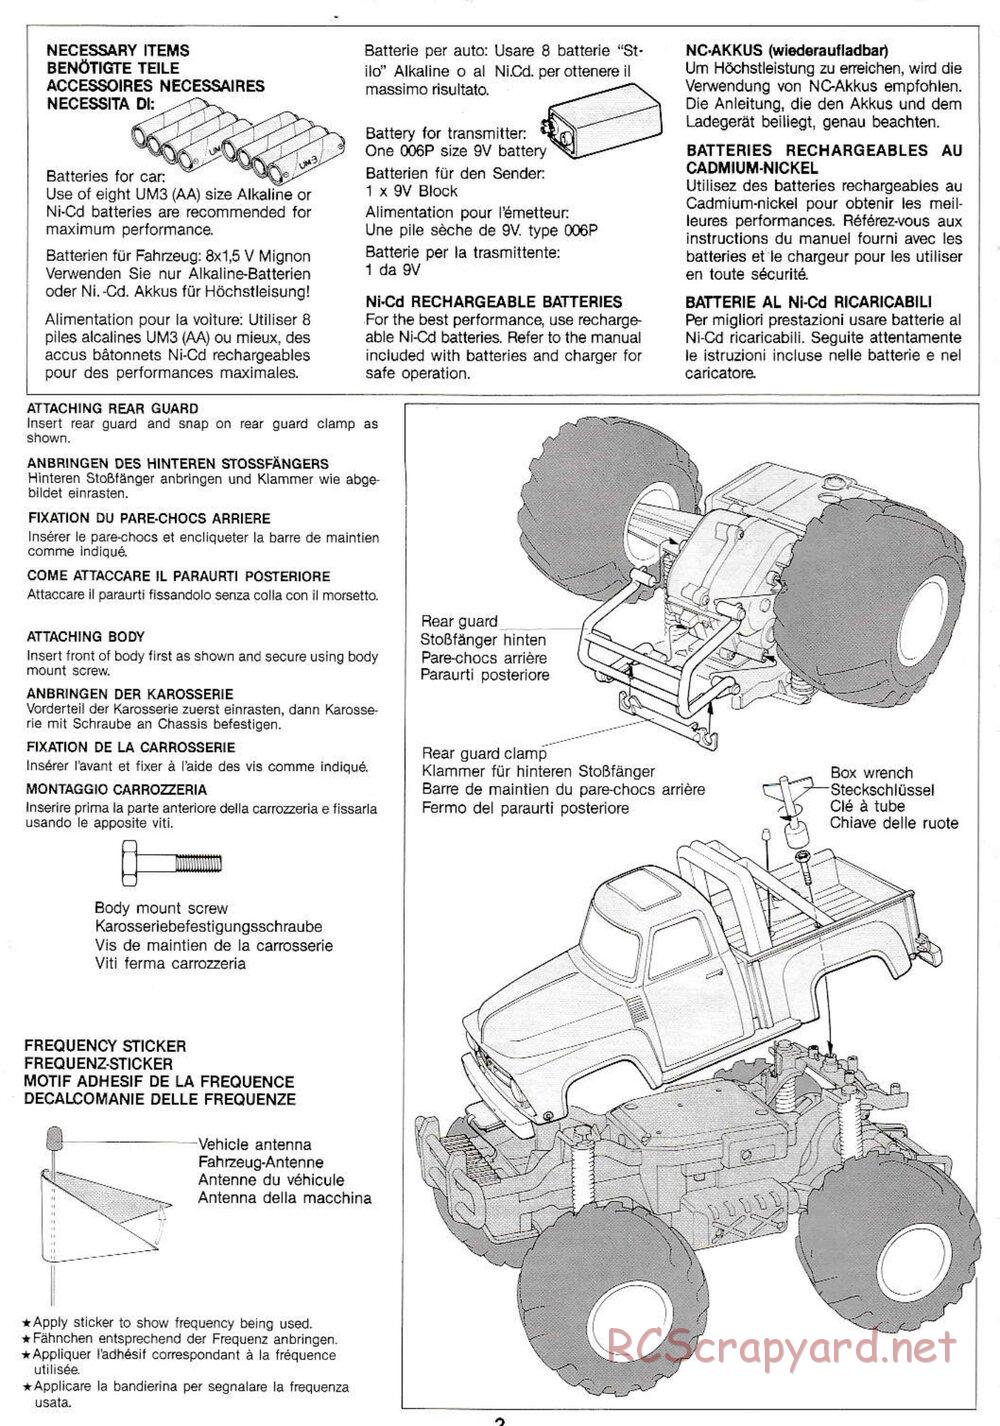 Tamiya - Midnight Pumpkin QD Chassis - Manual - Page 2